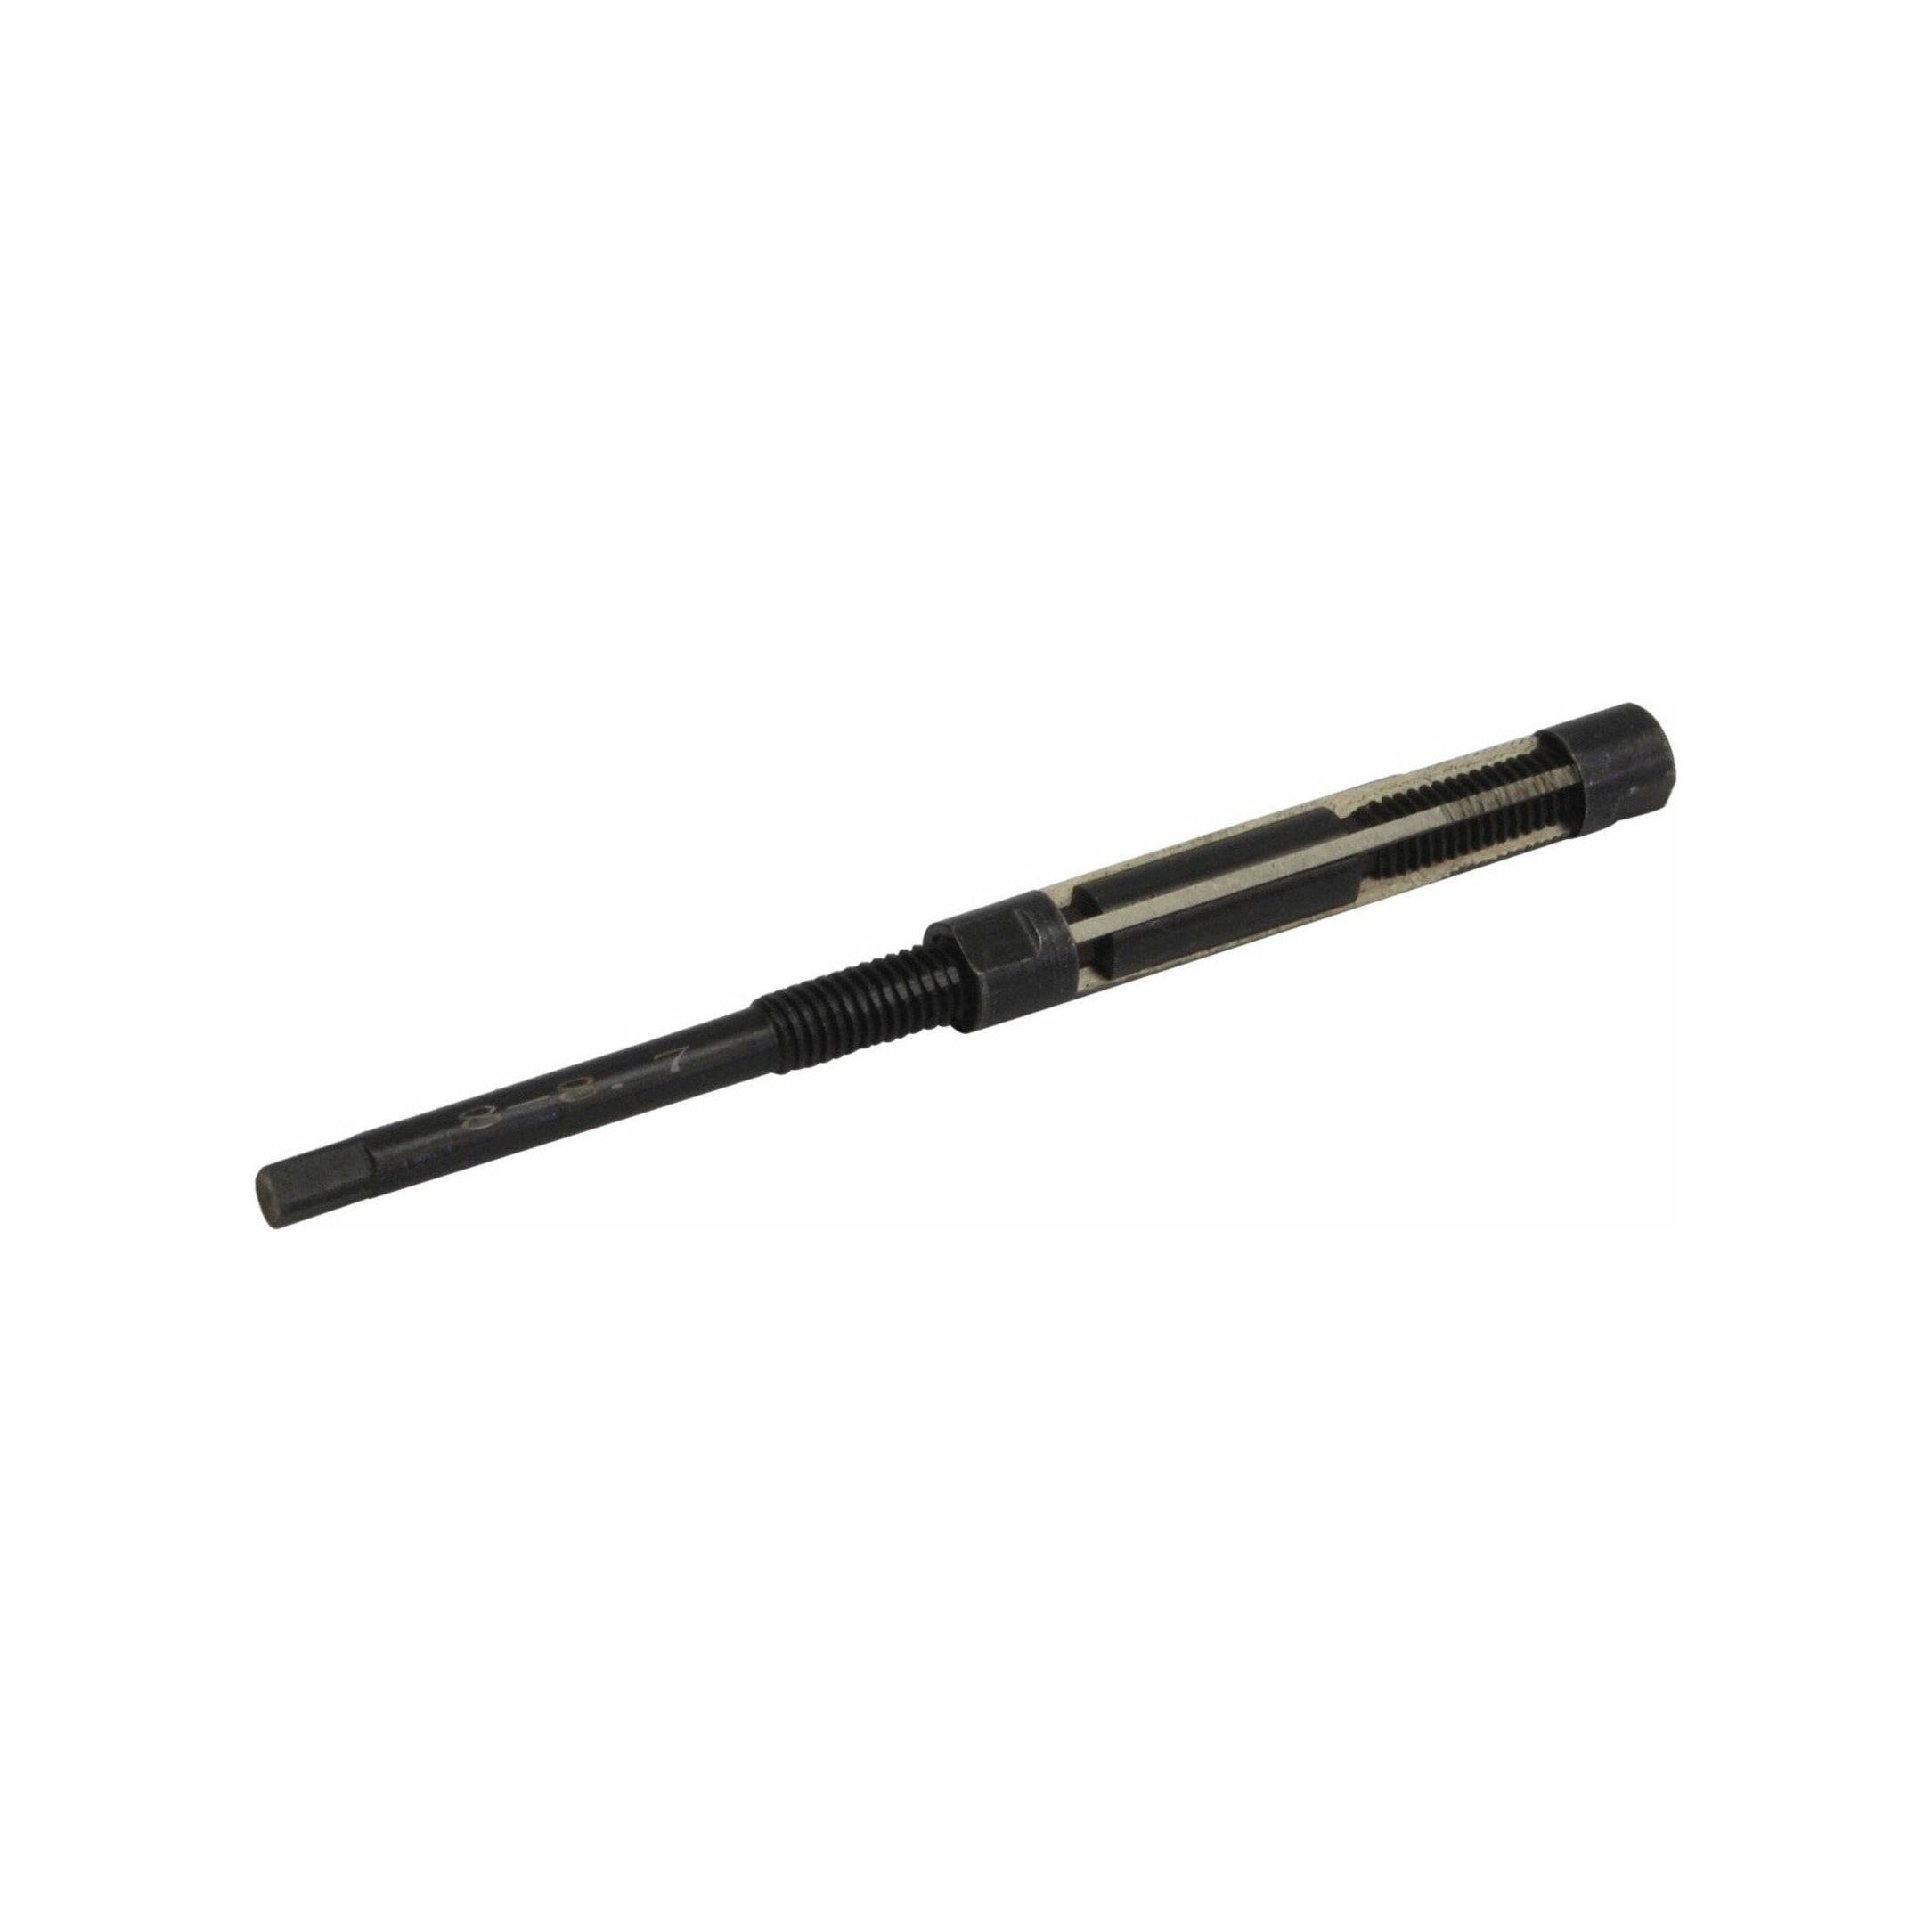  8 - 8.7 mm  HSS Blade No Guide Adjustable Hand Reamer